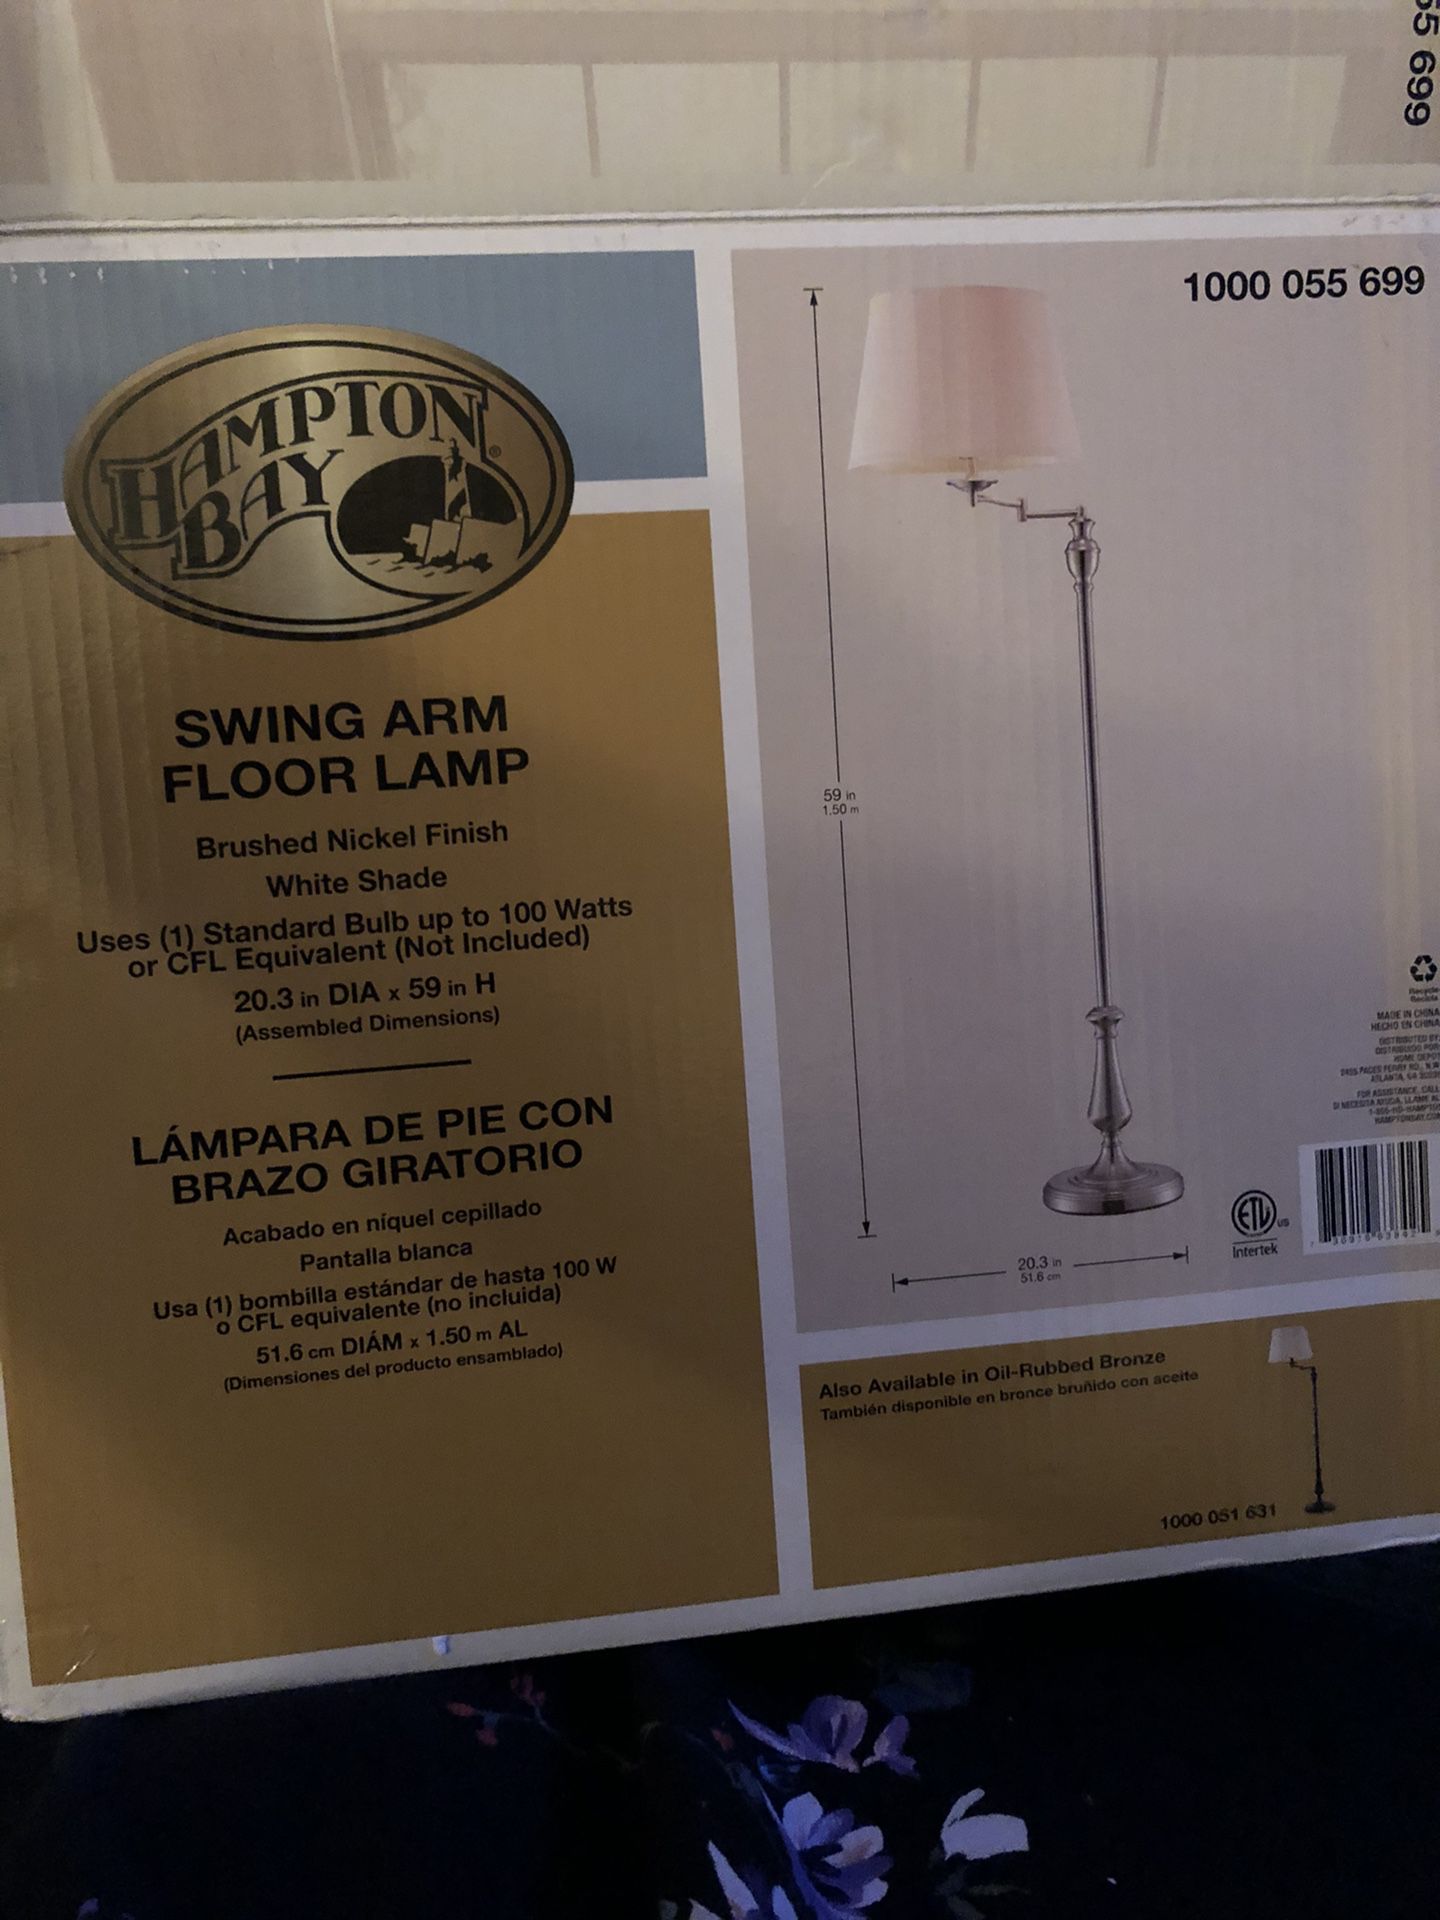 NEW Hampton Bay Swing Arm Floor Lamp # 1000 055 699